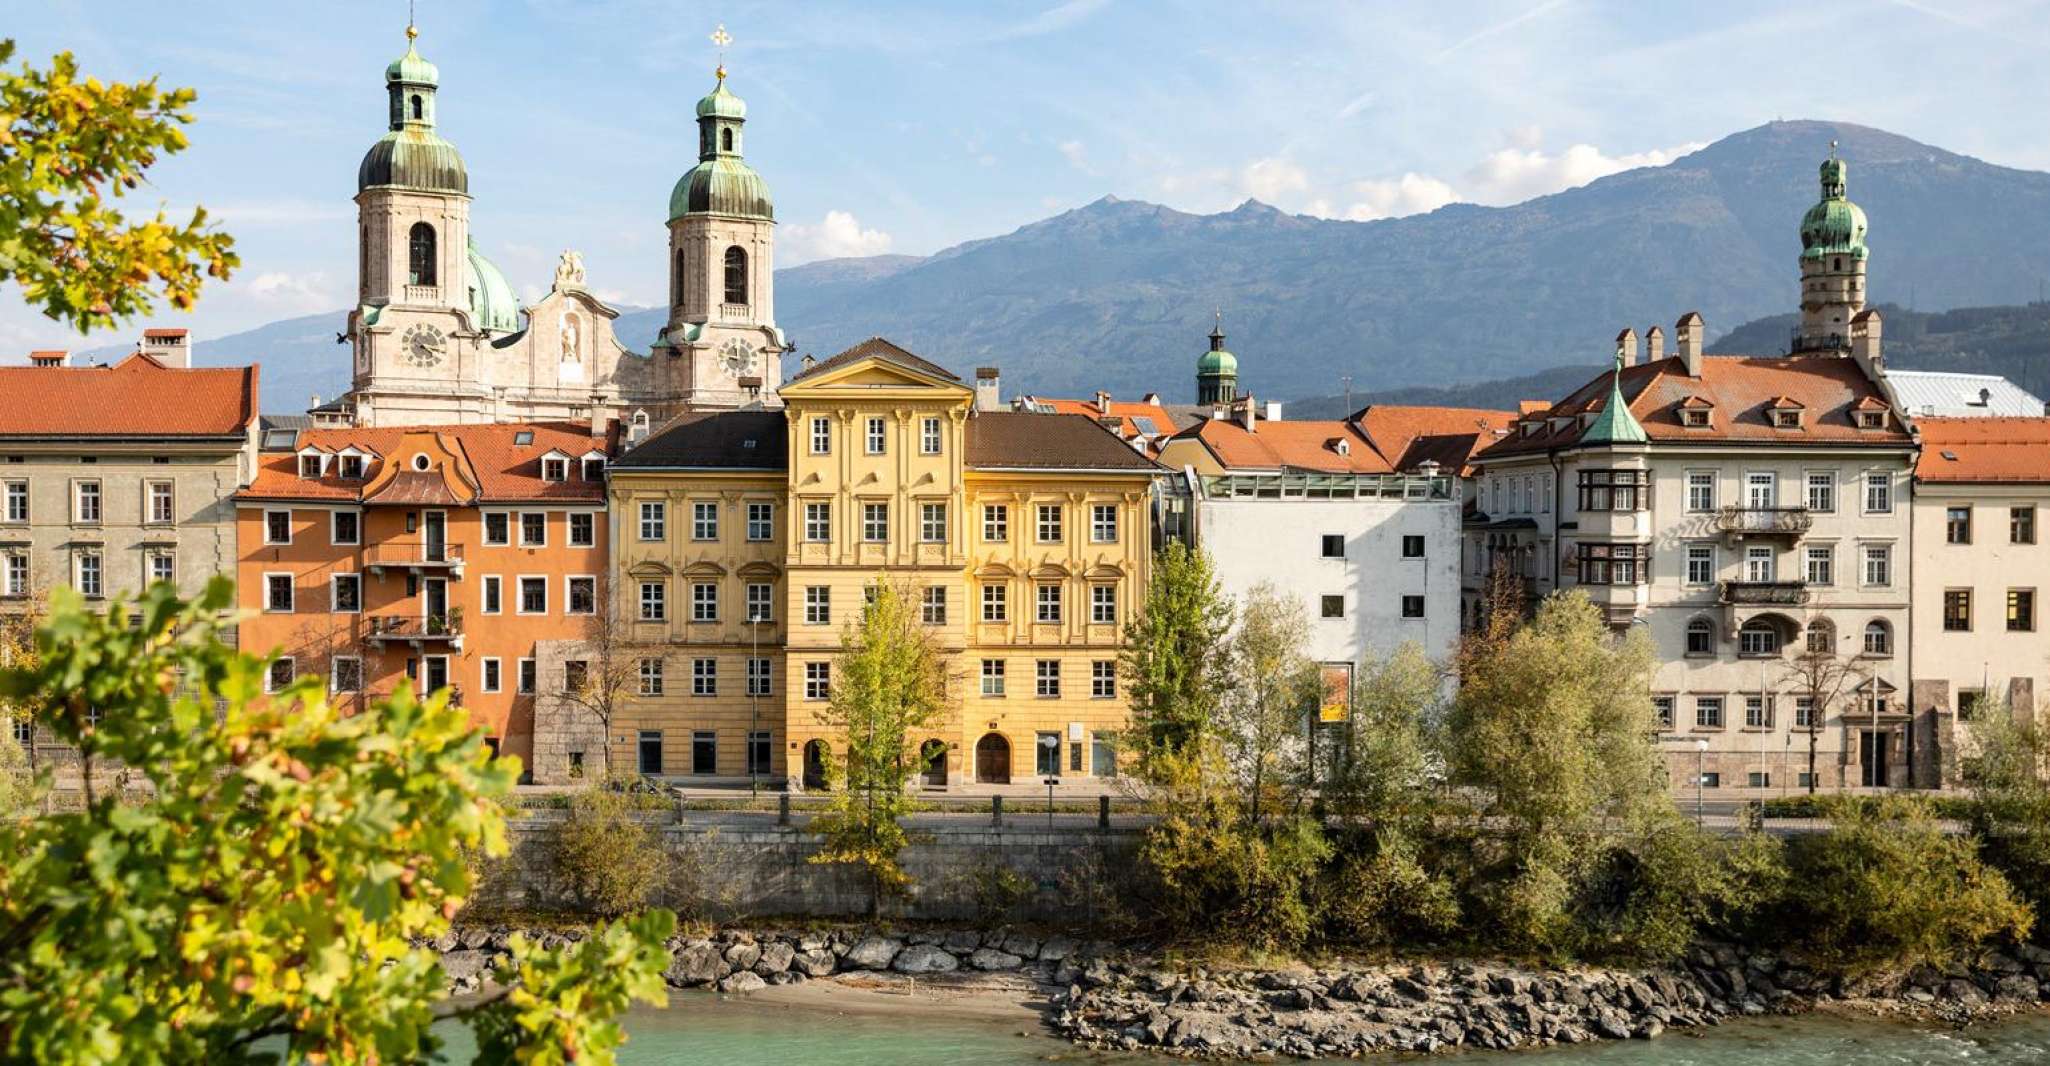 Innsbruck, City Tower Entrance Ticket - Housity